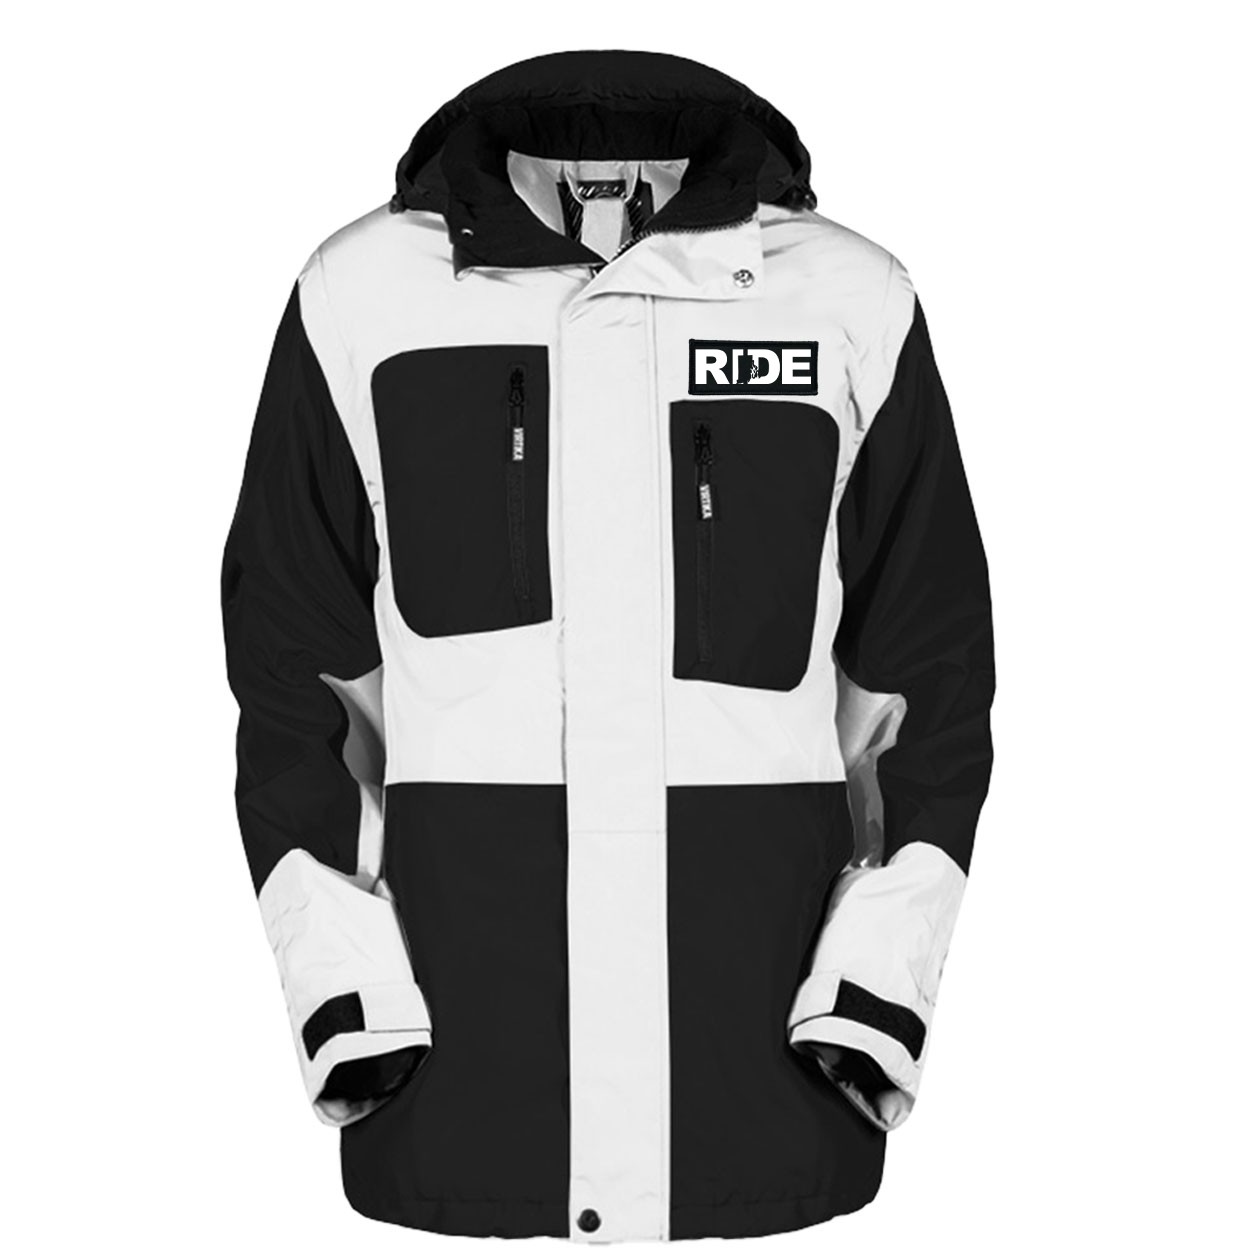 Ride Rhode Island Classic Woven Patch Pro Snowboard Jacket (Black/White)